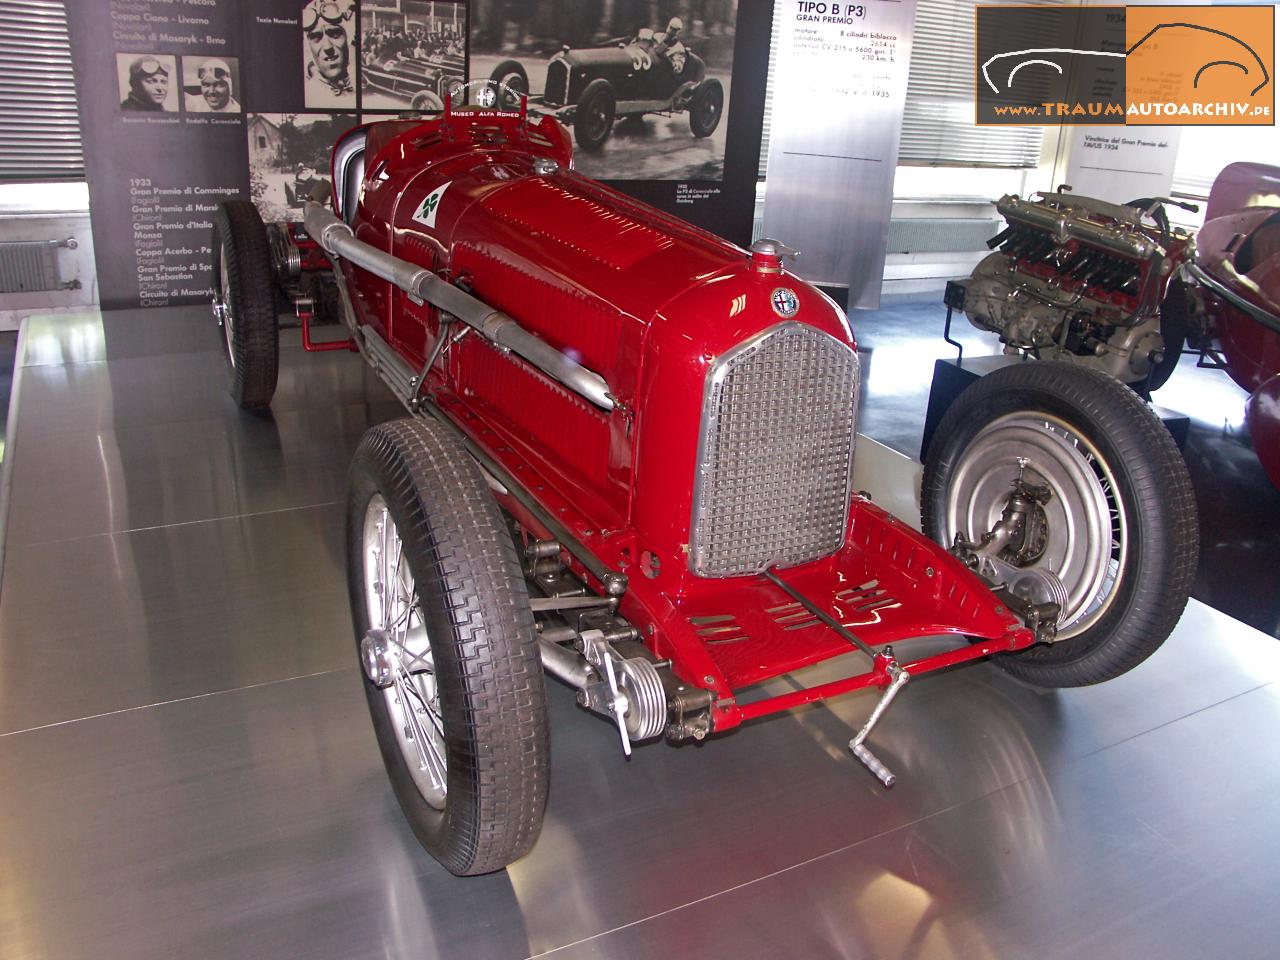 09 - Alfa Romeo P3 Tipo B '1932.jpg 169.5K